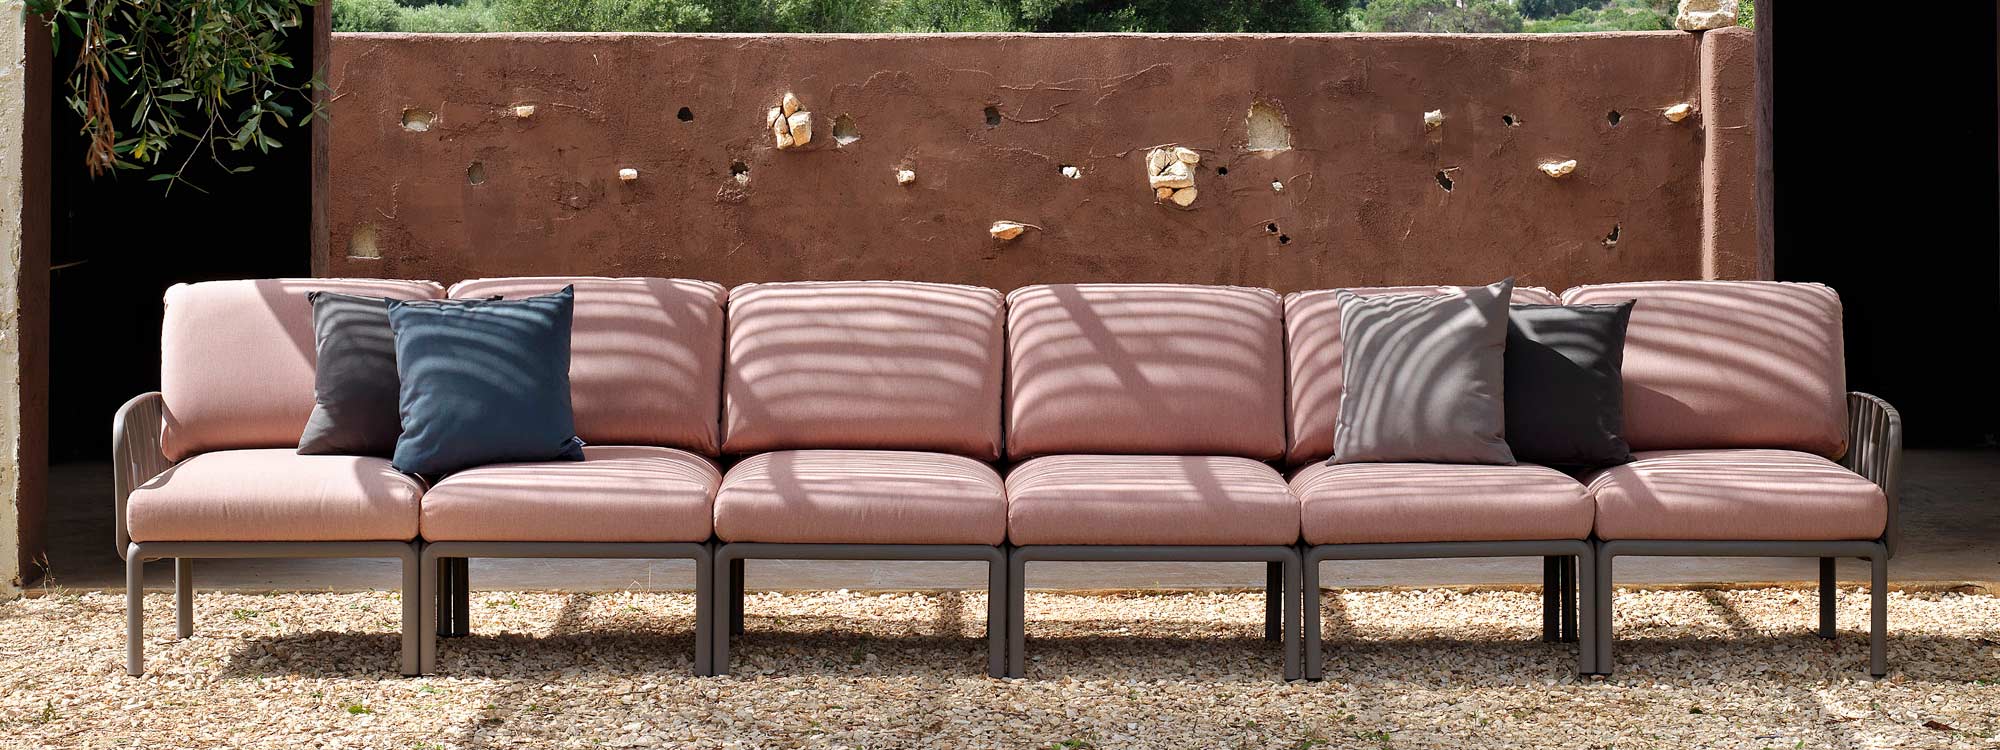 Dove / Tortora Komodo MODULAR GARDEN SOFA - MODERN Outdoor Lounge Set In HIGH QUALITY Exterior Furniture MATERIALS By Nardi ITALIAN OUTDOOR FURNITURE Co.